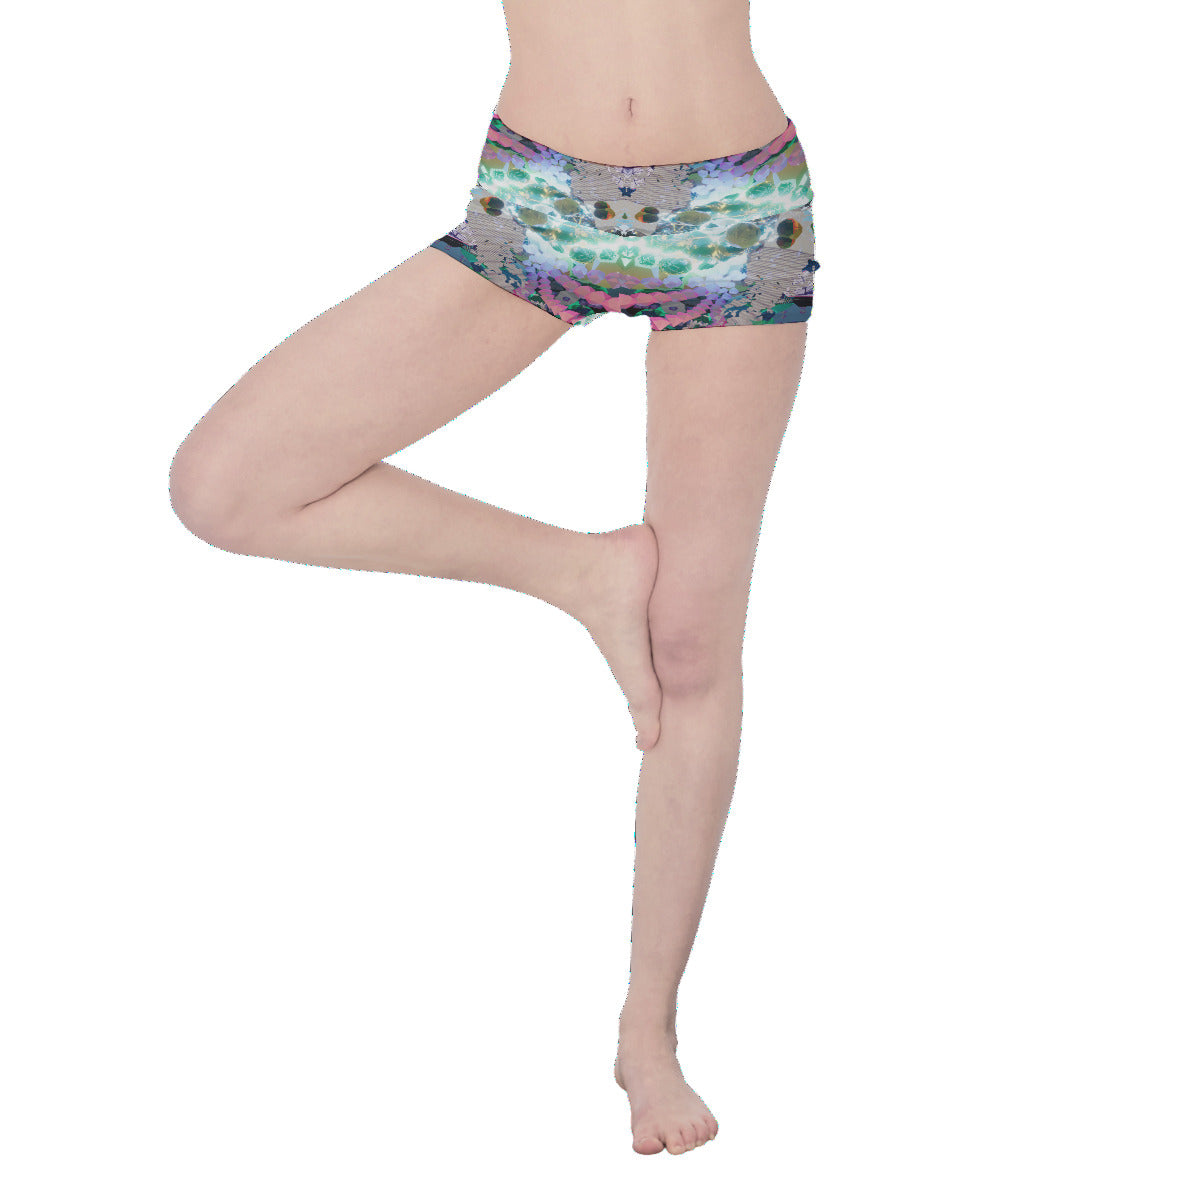 Psychedelic 3D Digital Art All-Over Print Women's Yoga Shorts